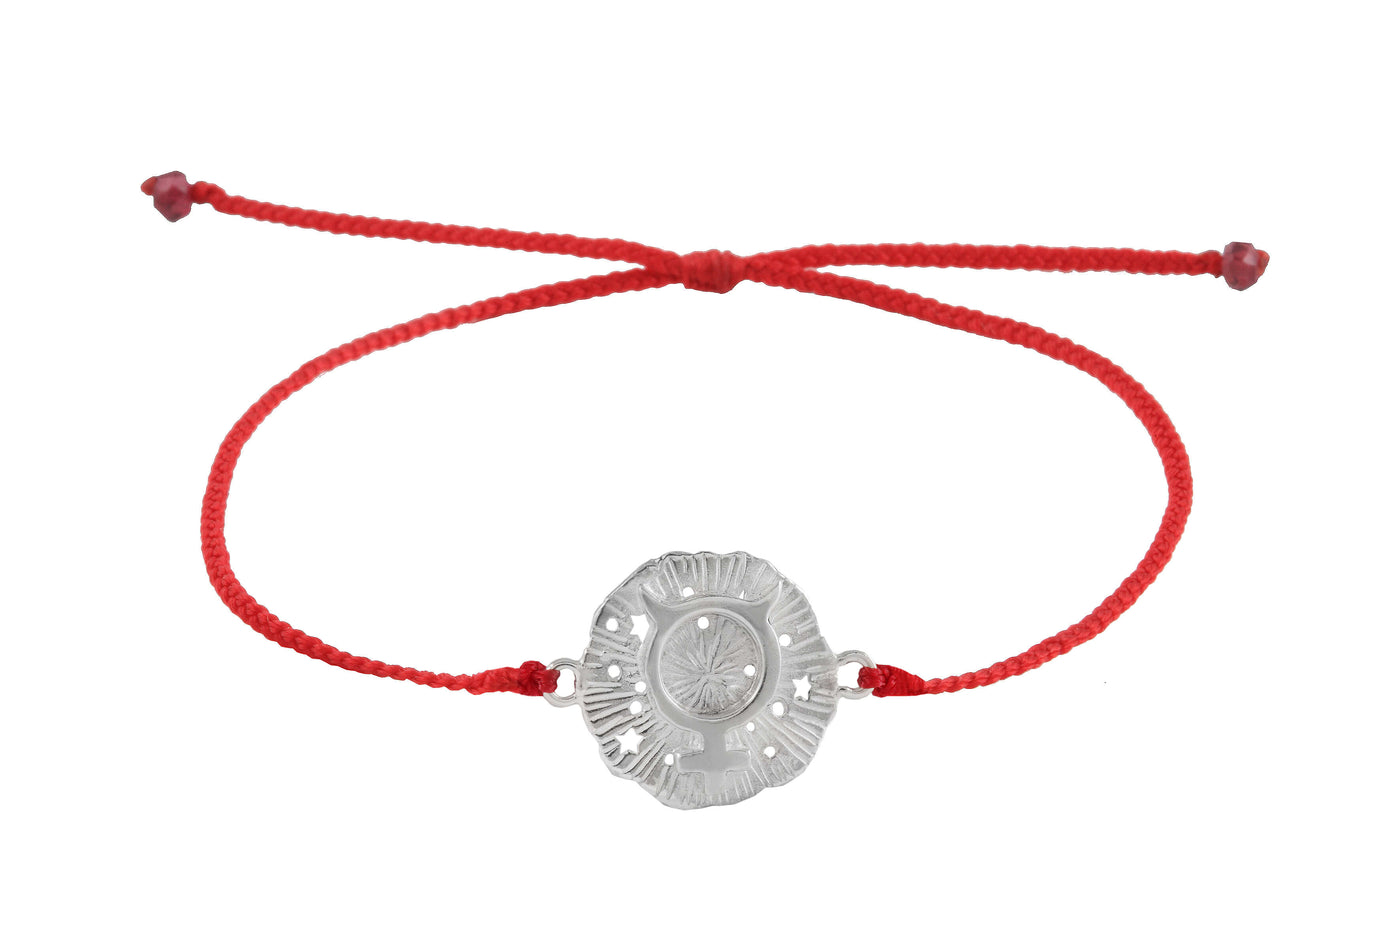 String bracelet with Mercury medallion amulet. Silver